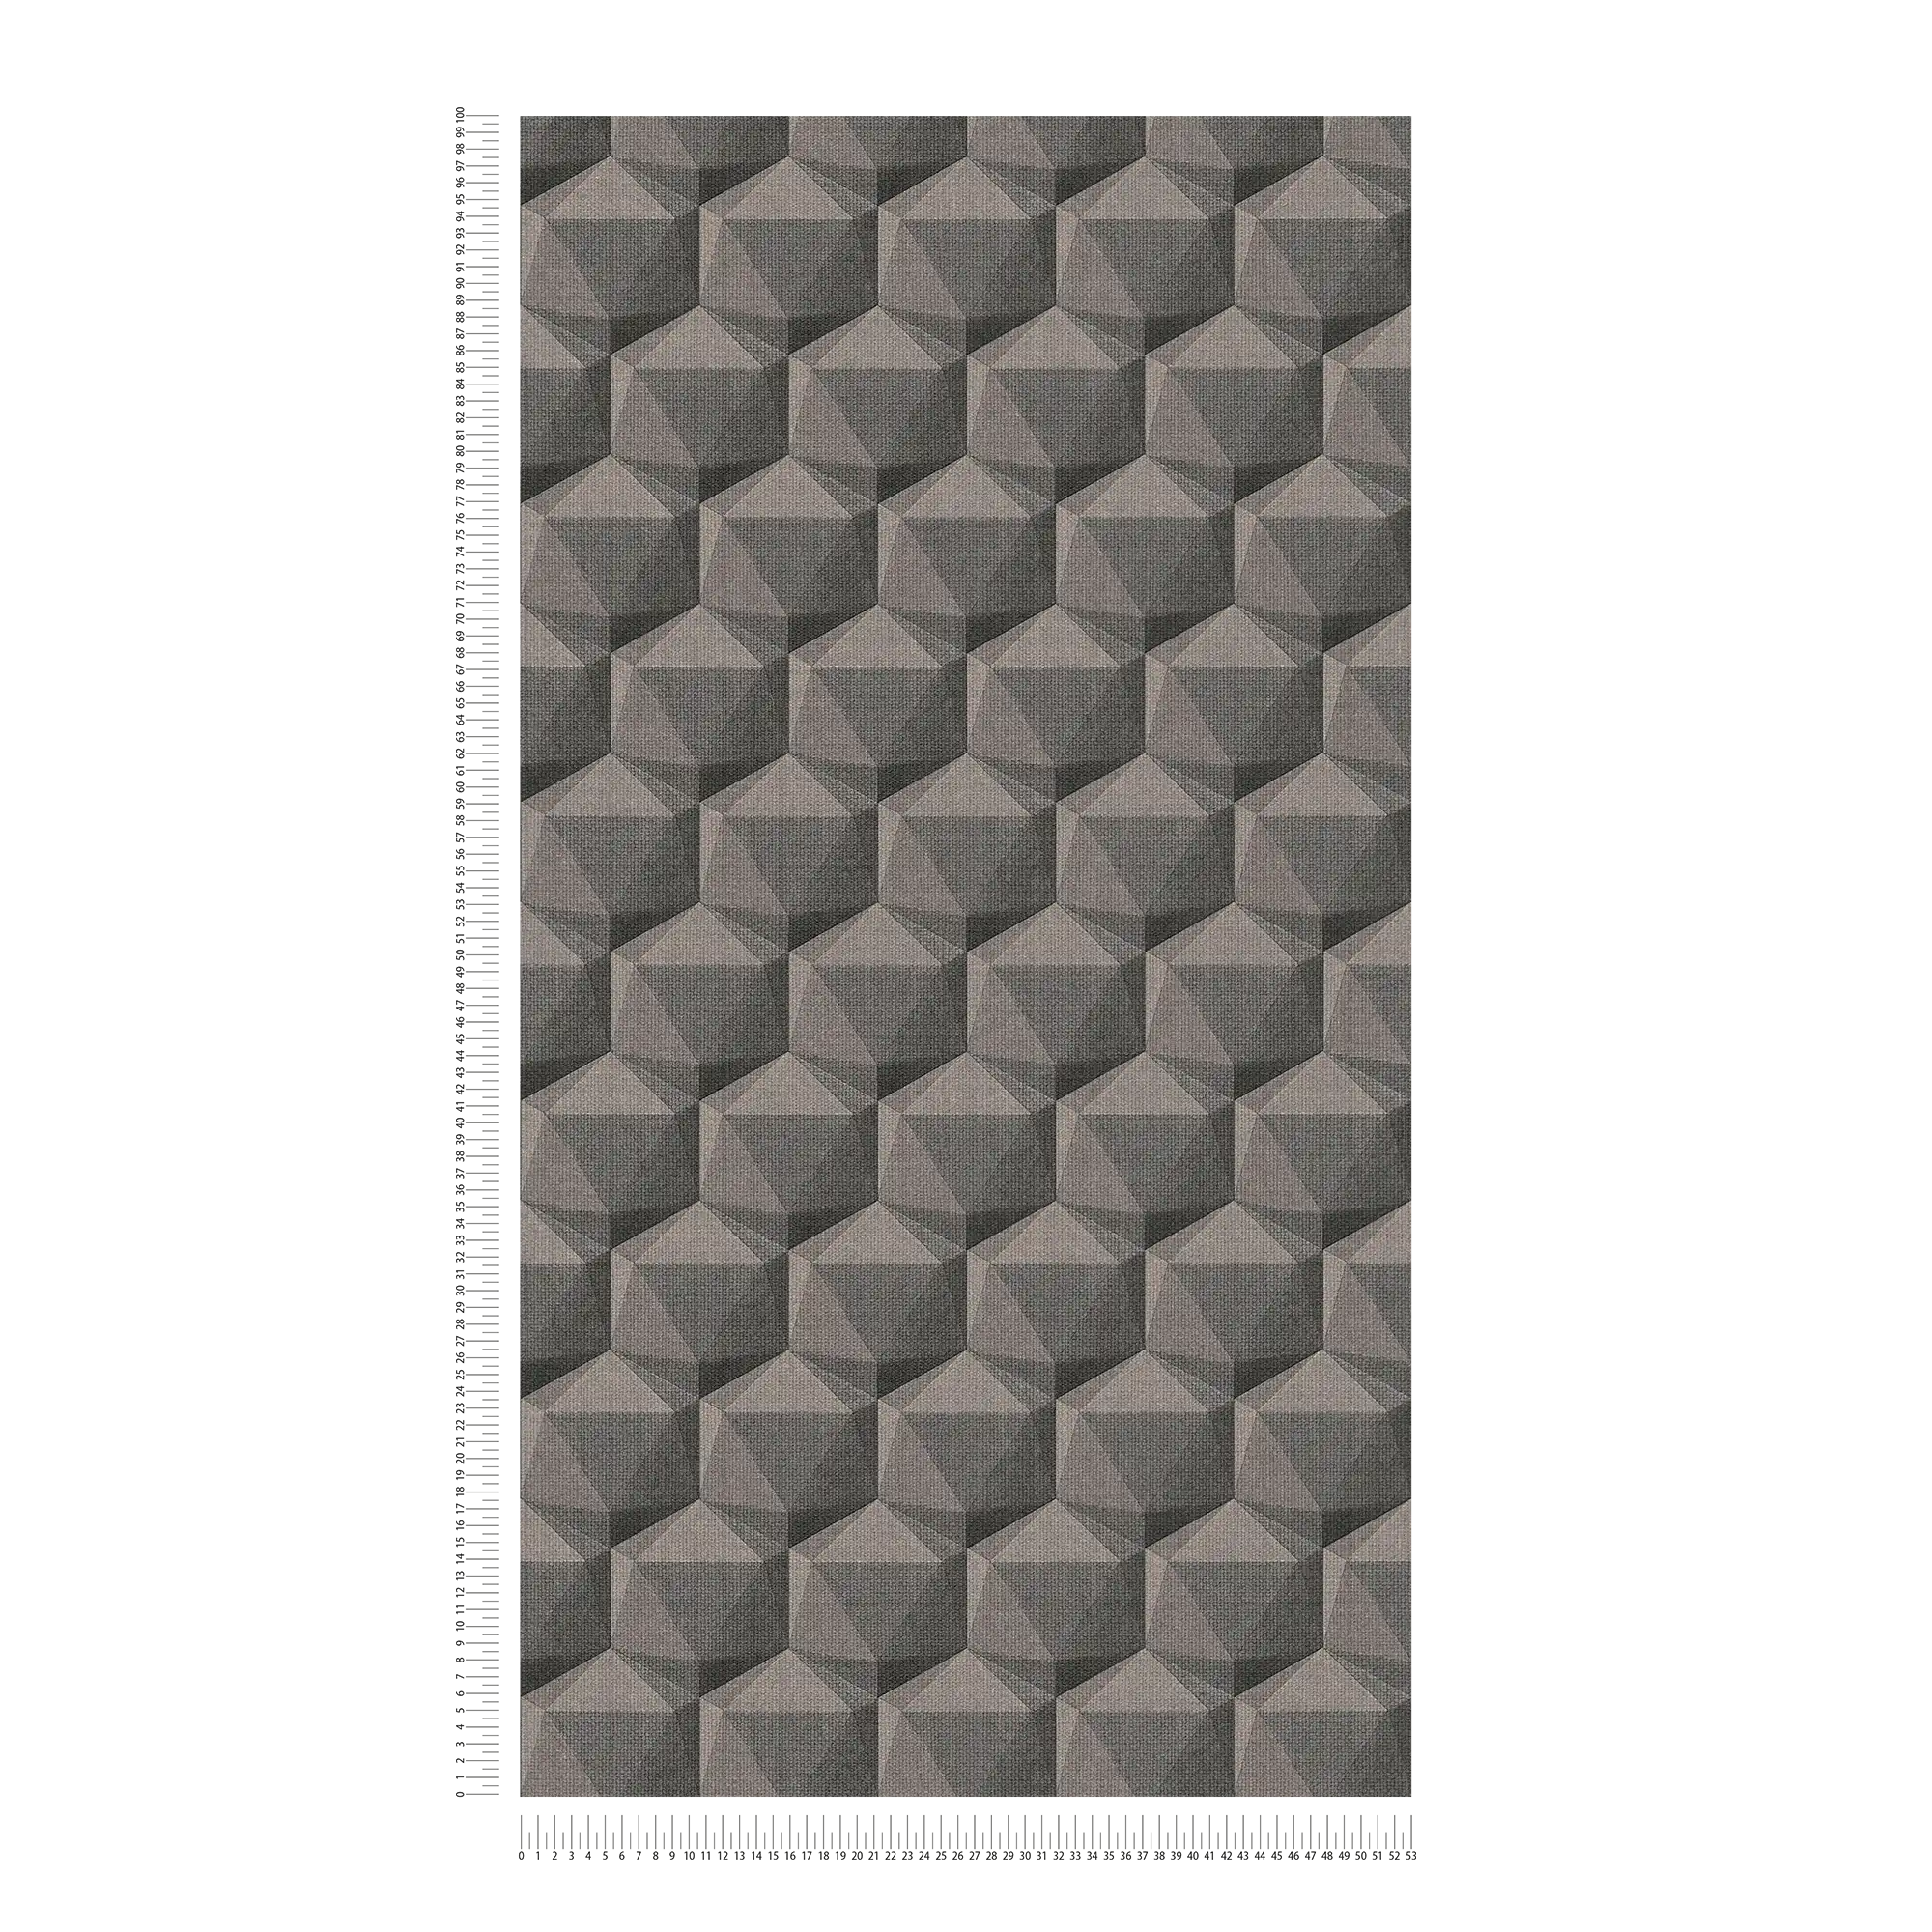             Papel pintado gráfico de óptica 3D con patrón poligonal - gris, beige, negro
        